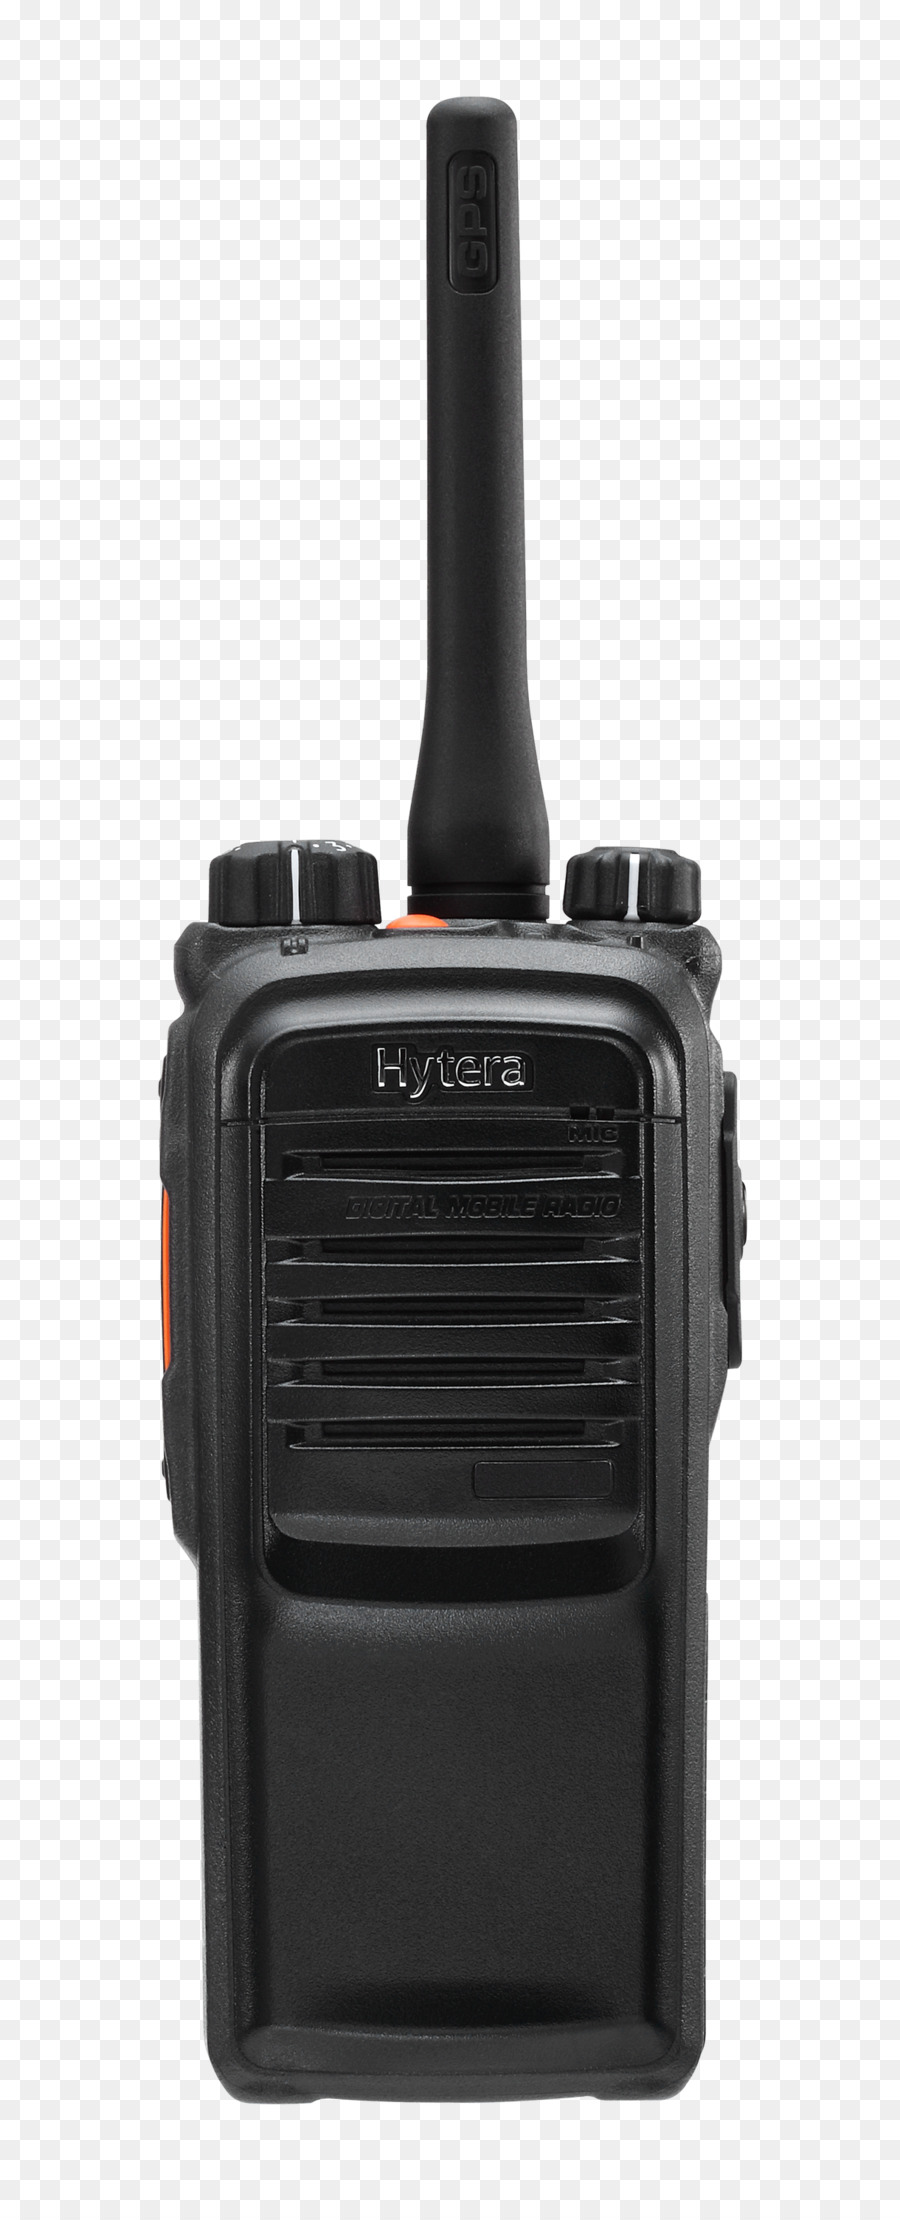 Bidirecionais De Rádio，Handheld Rádios Bidirecionais PNG